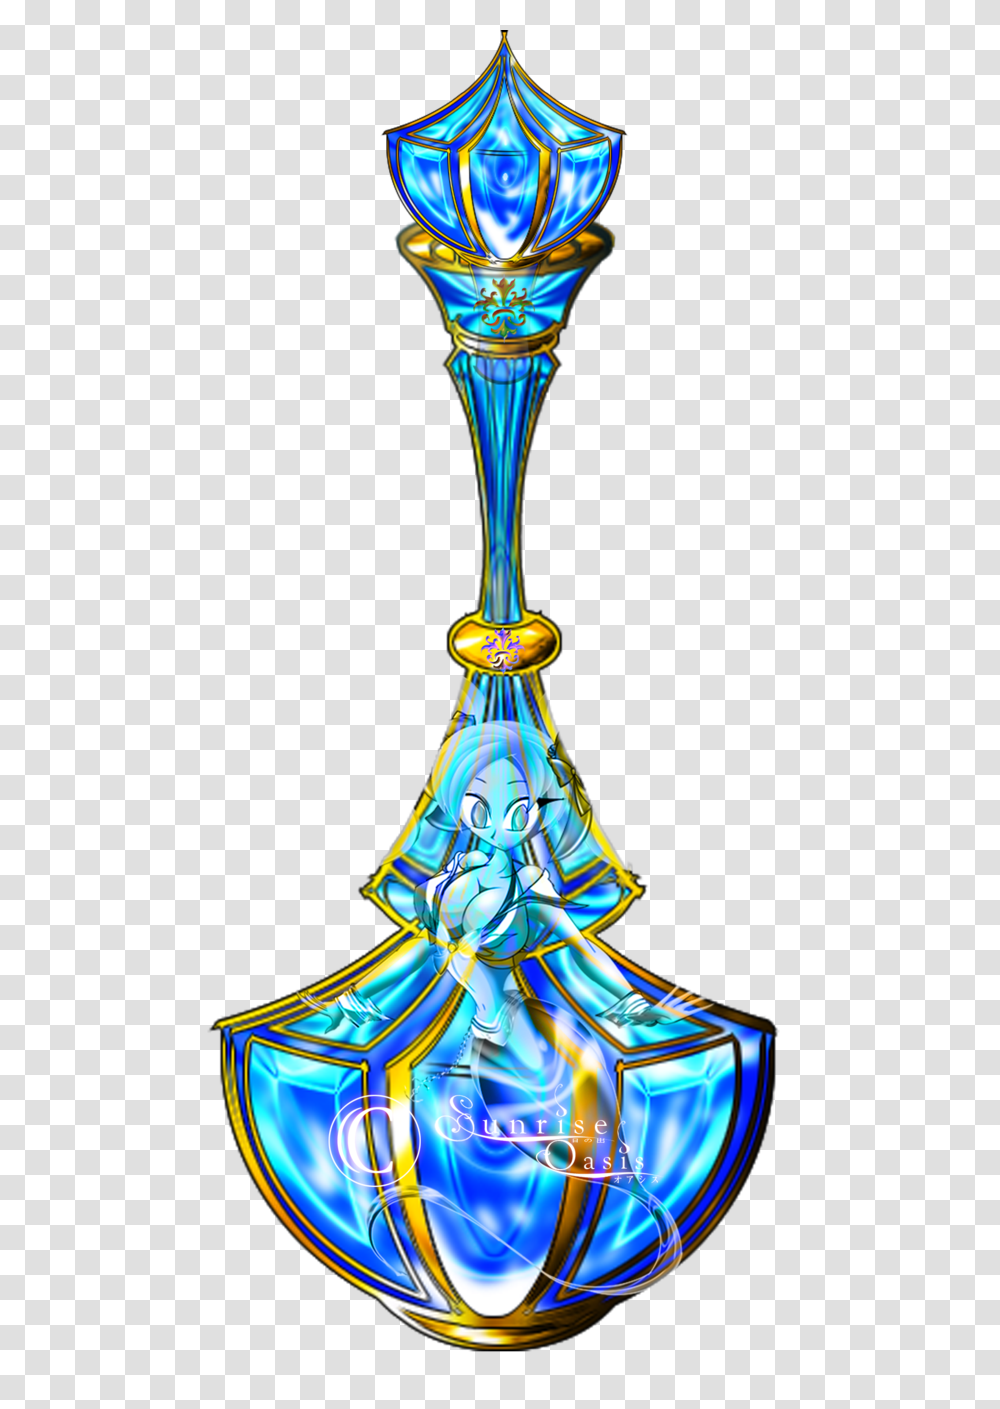 Genie Bottle Genie In Bottle Perfume Bottles, Ornament, Tree, Plant Transparent Png